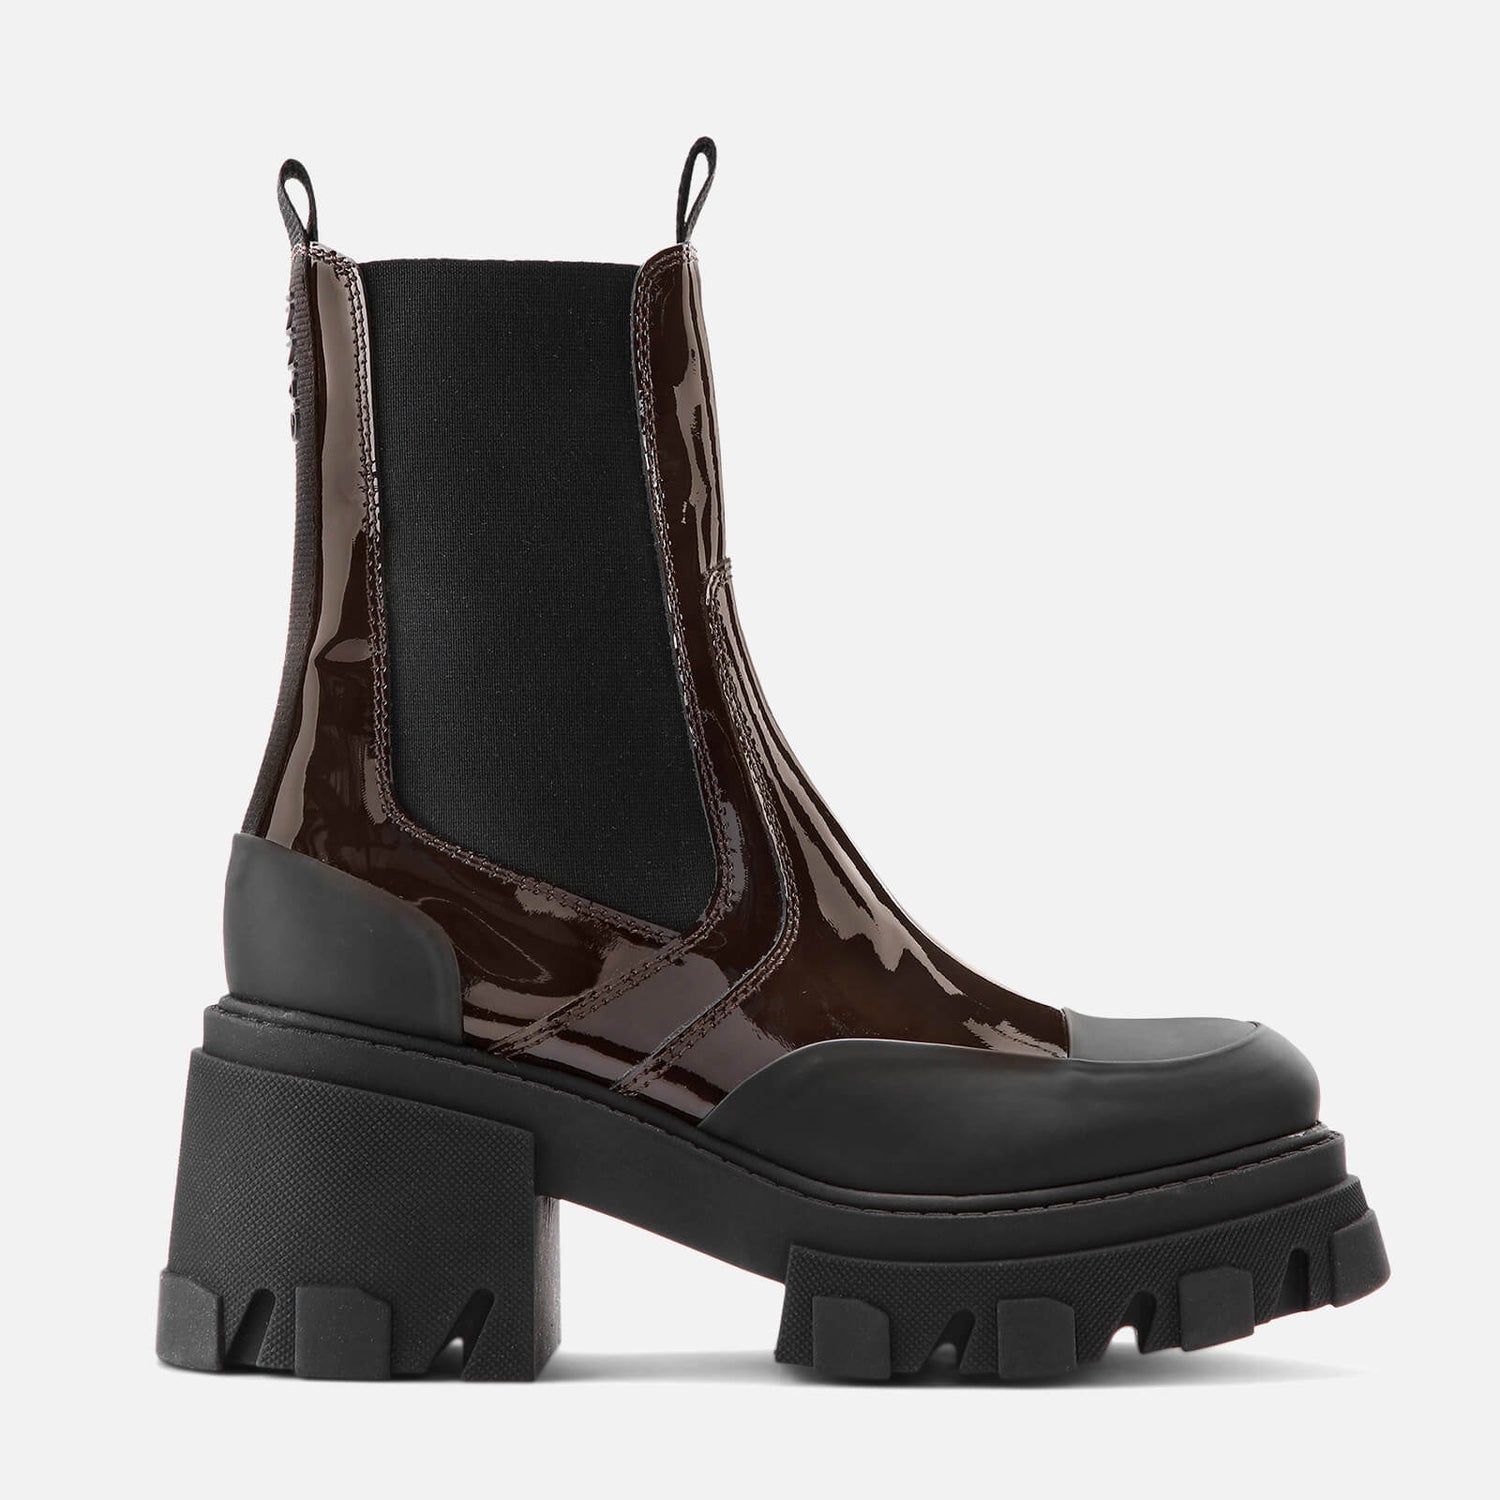 Ganni Women's Patent Leather Heeled Boots - Mole - UK 3